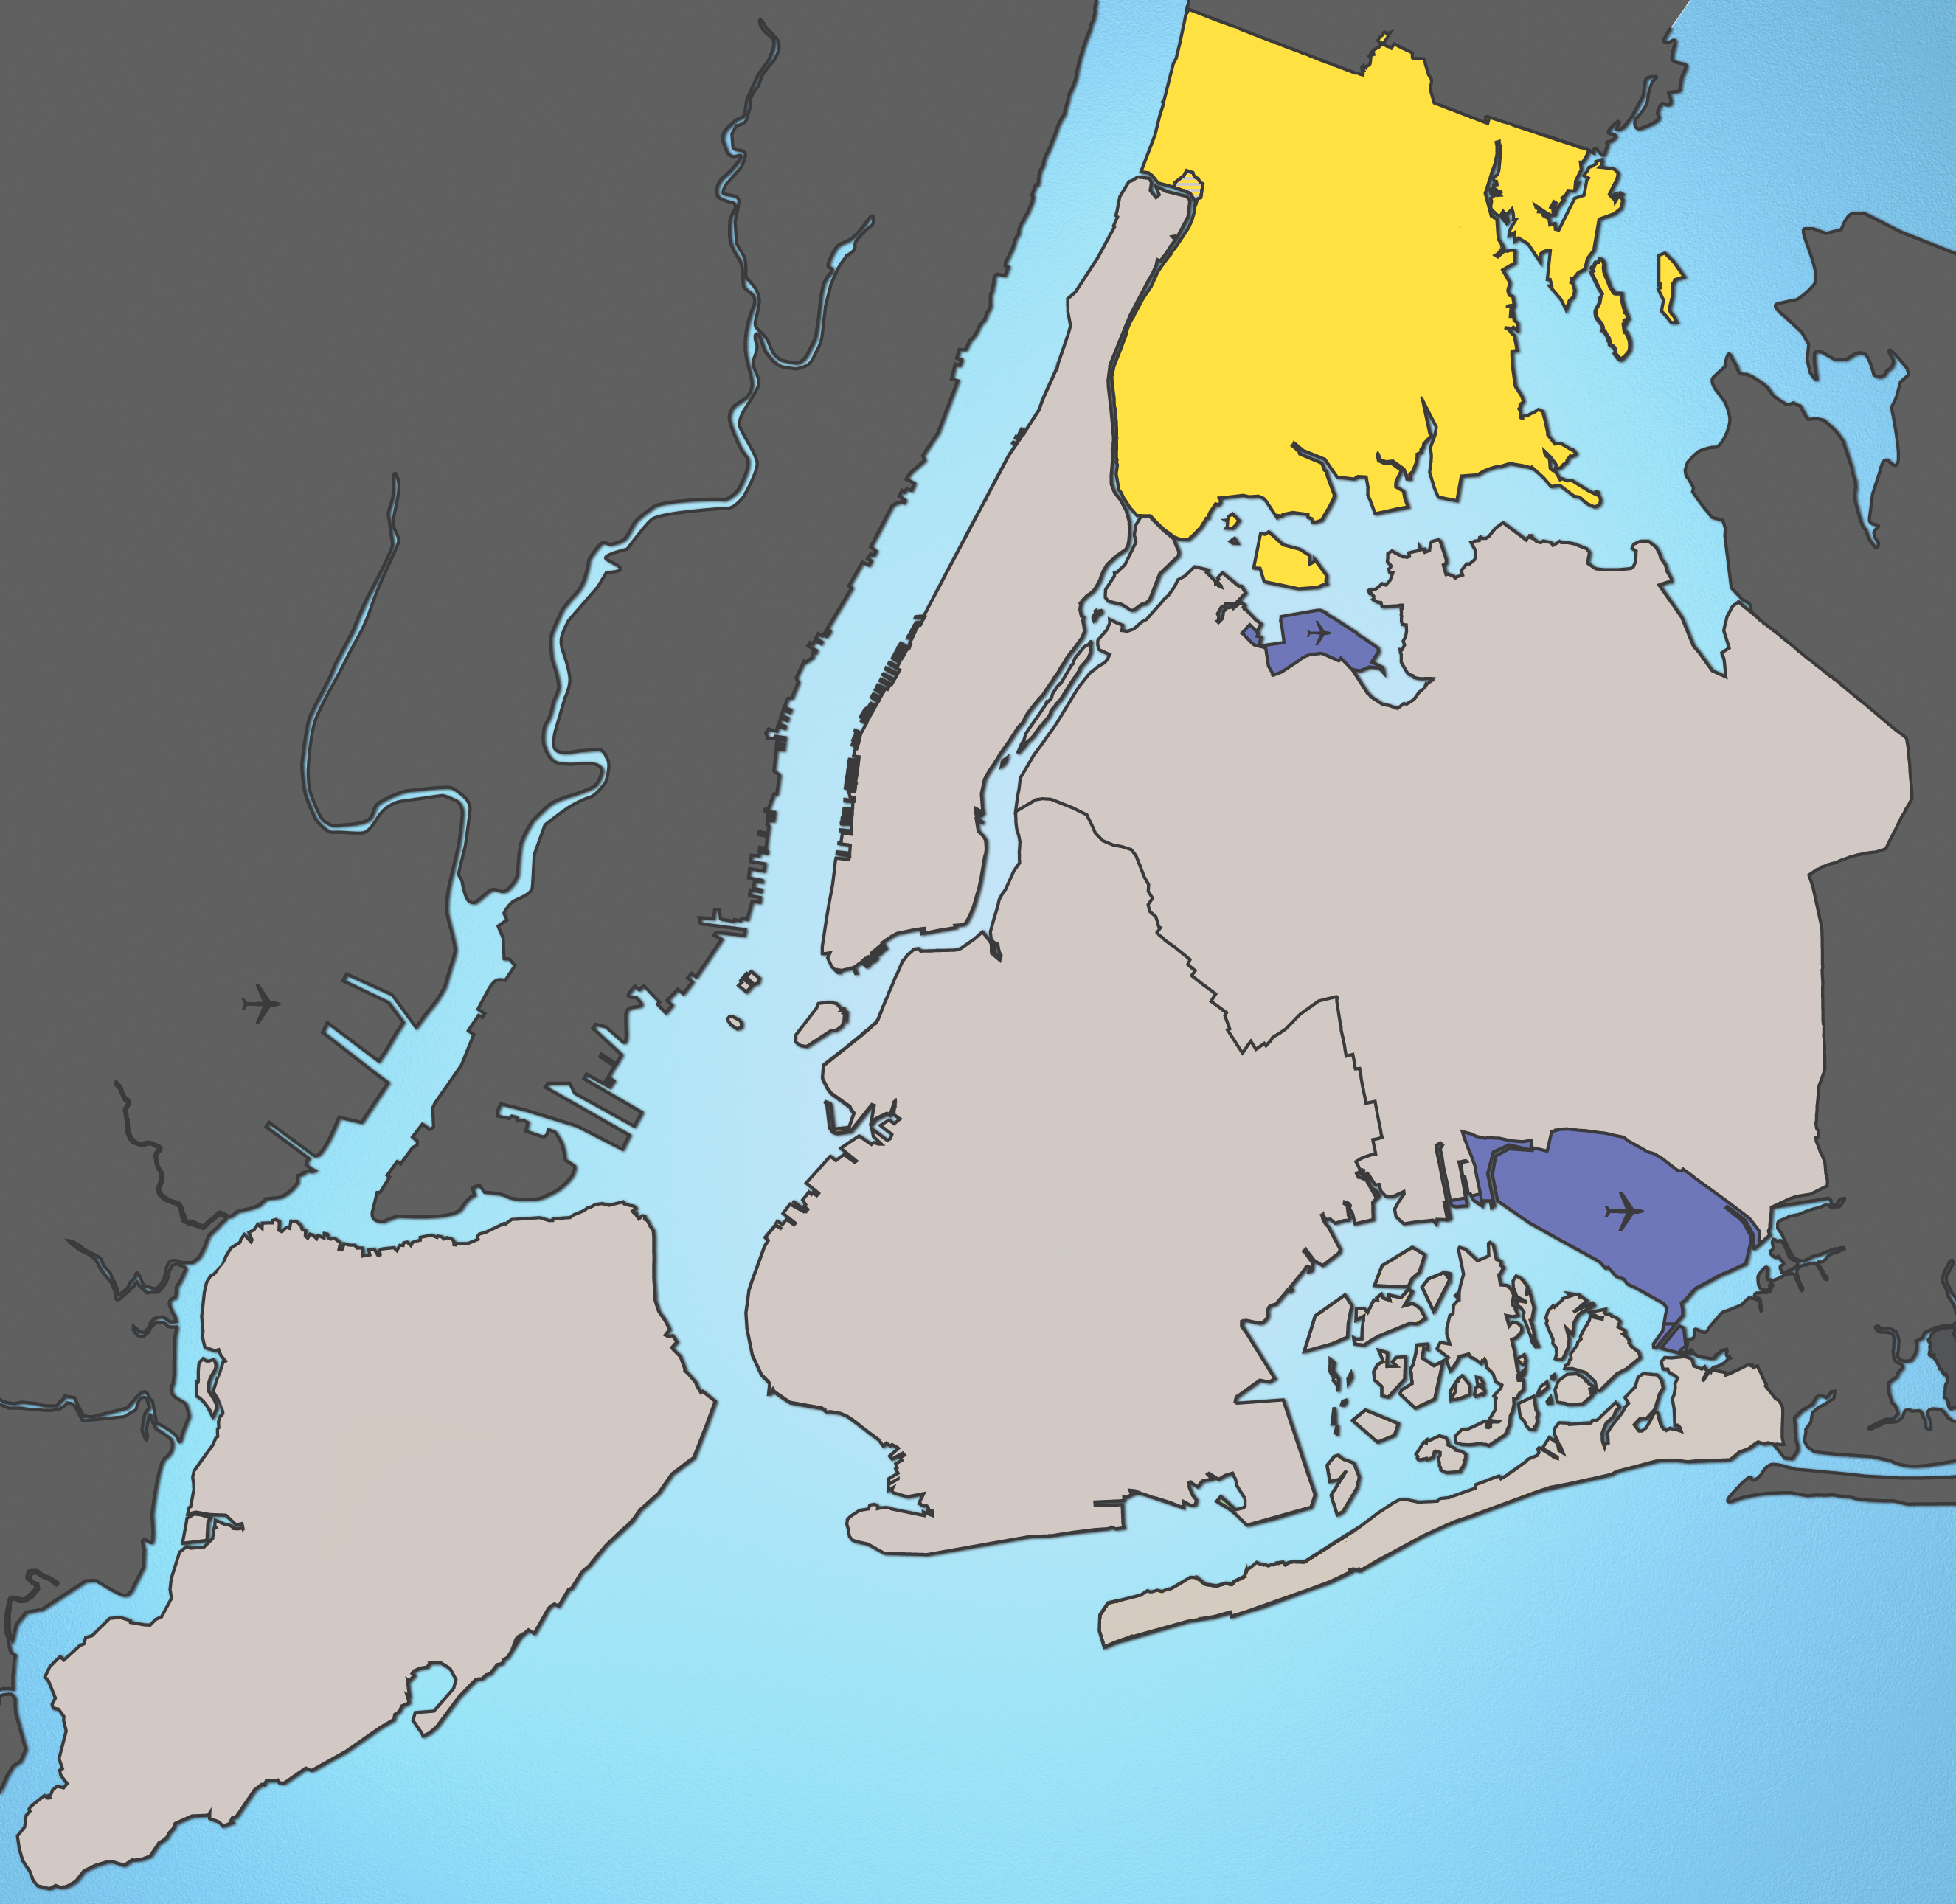 http://upload.wikimedia.org/wikipedia/commons/3/36/Bronx_Highlight_New_York_City_Map_Julius_Schorzman.png